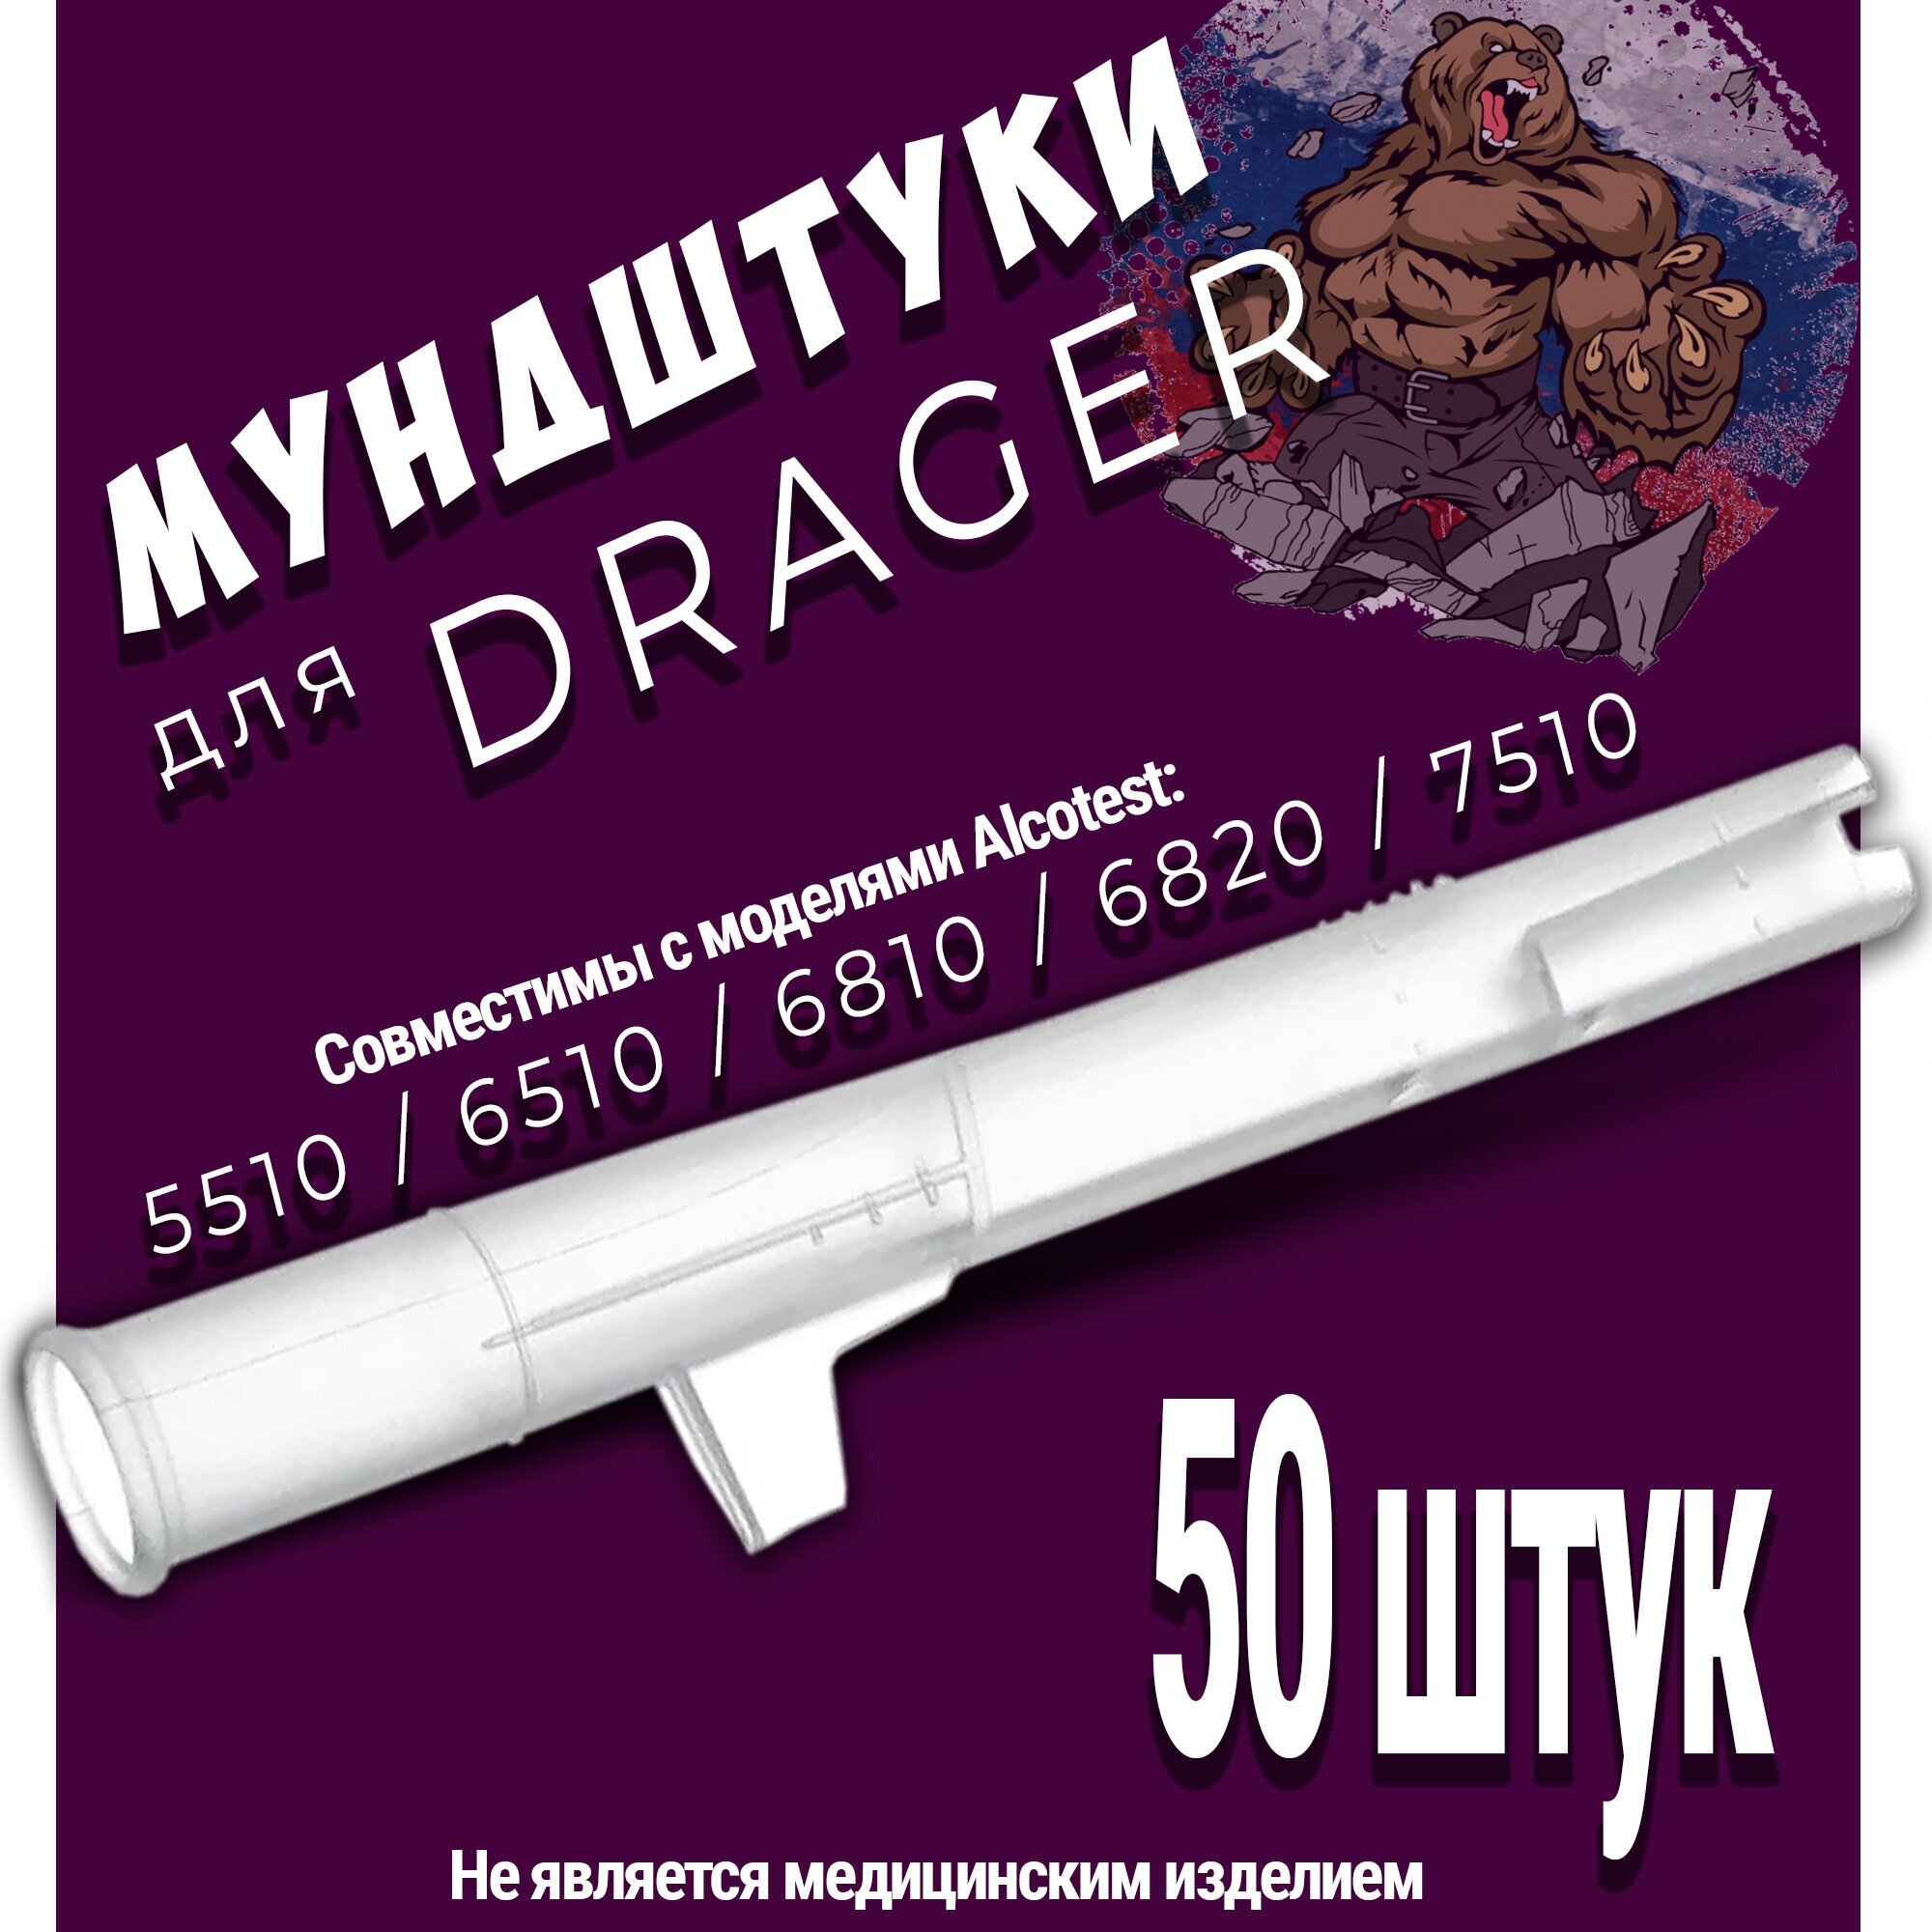 Мундуки для Алкотестера Drager Alcotest - 50 ук